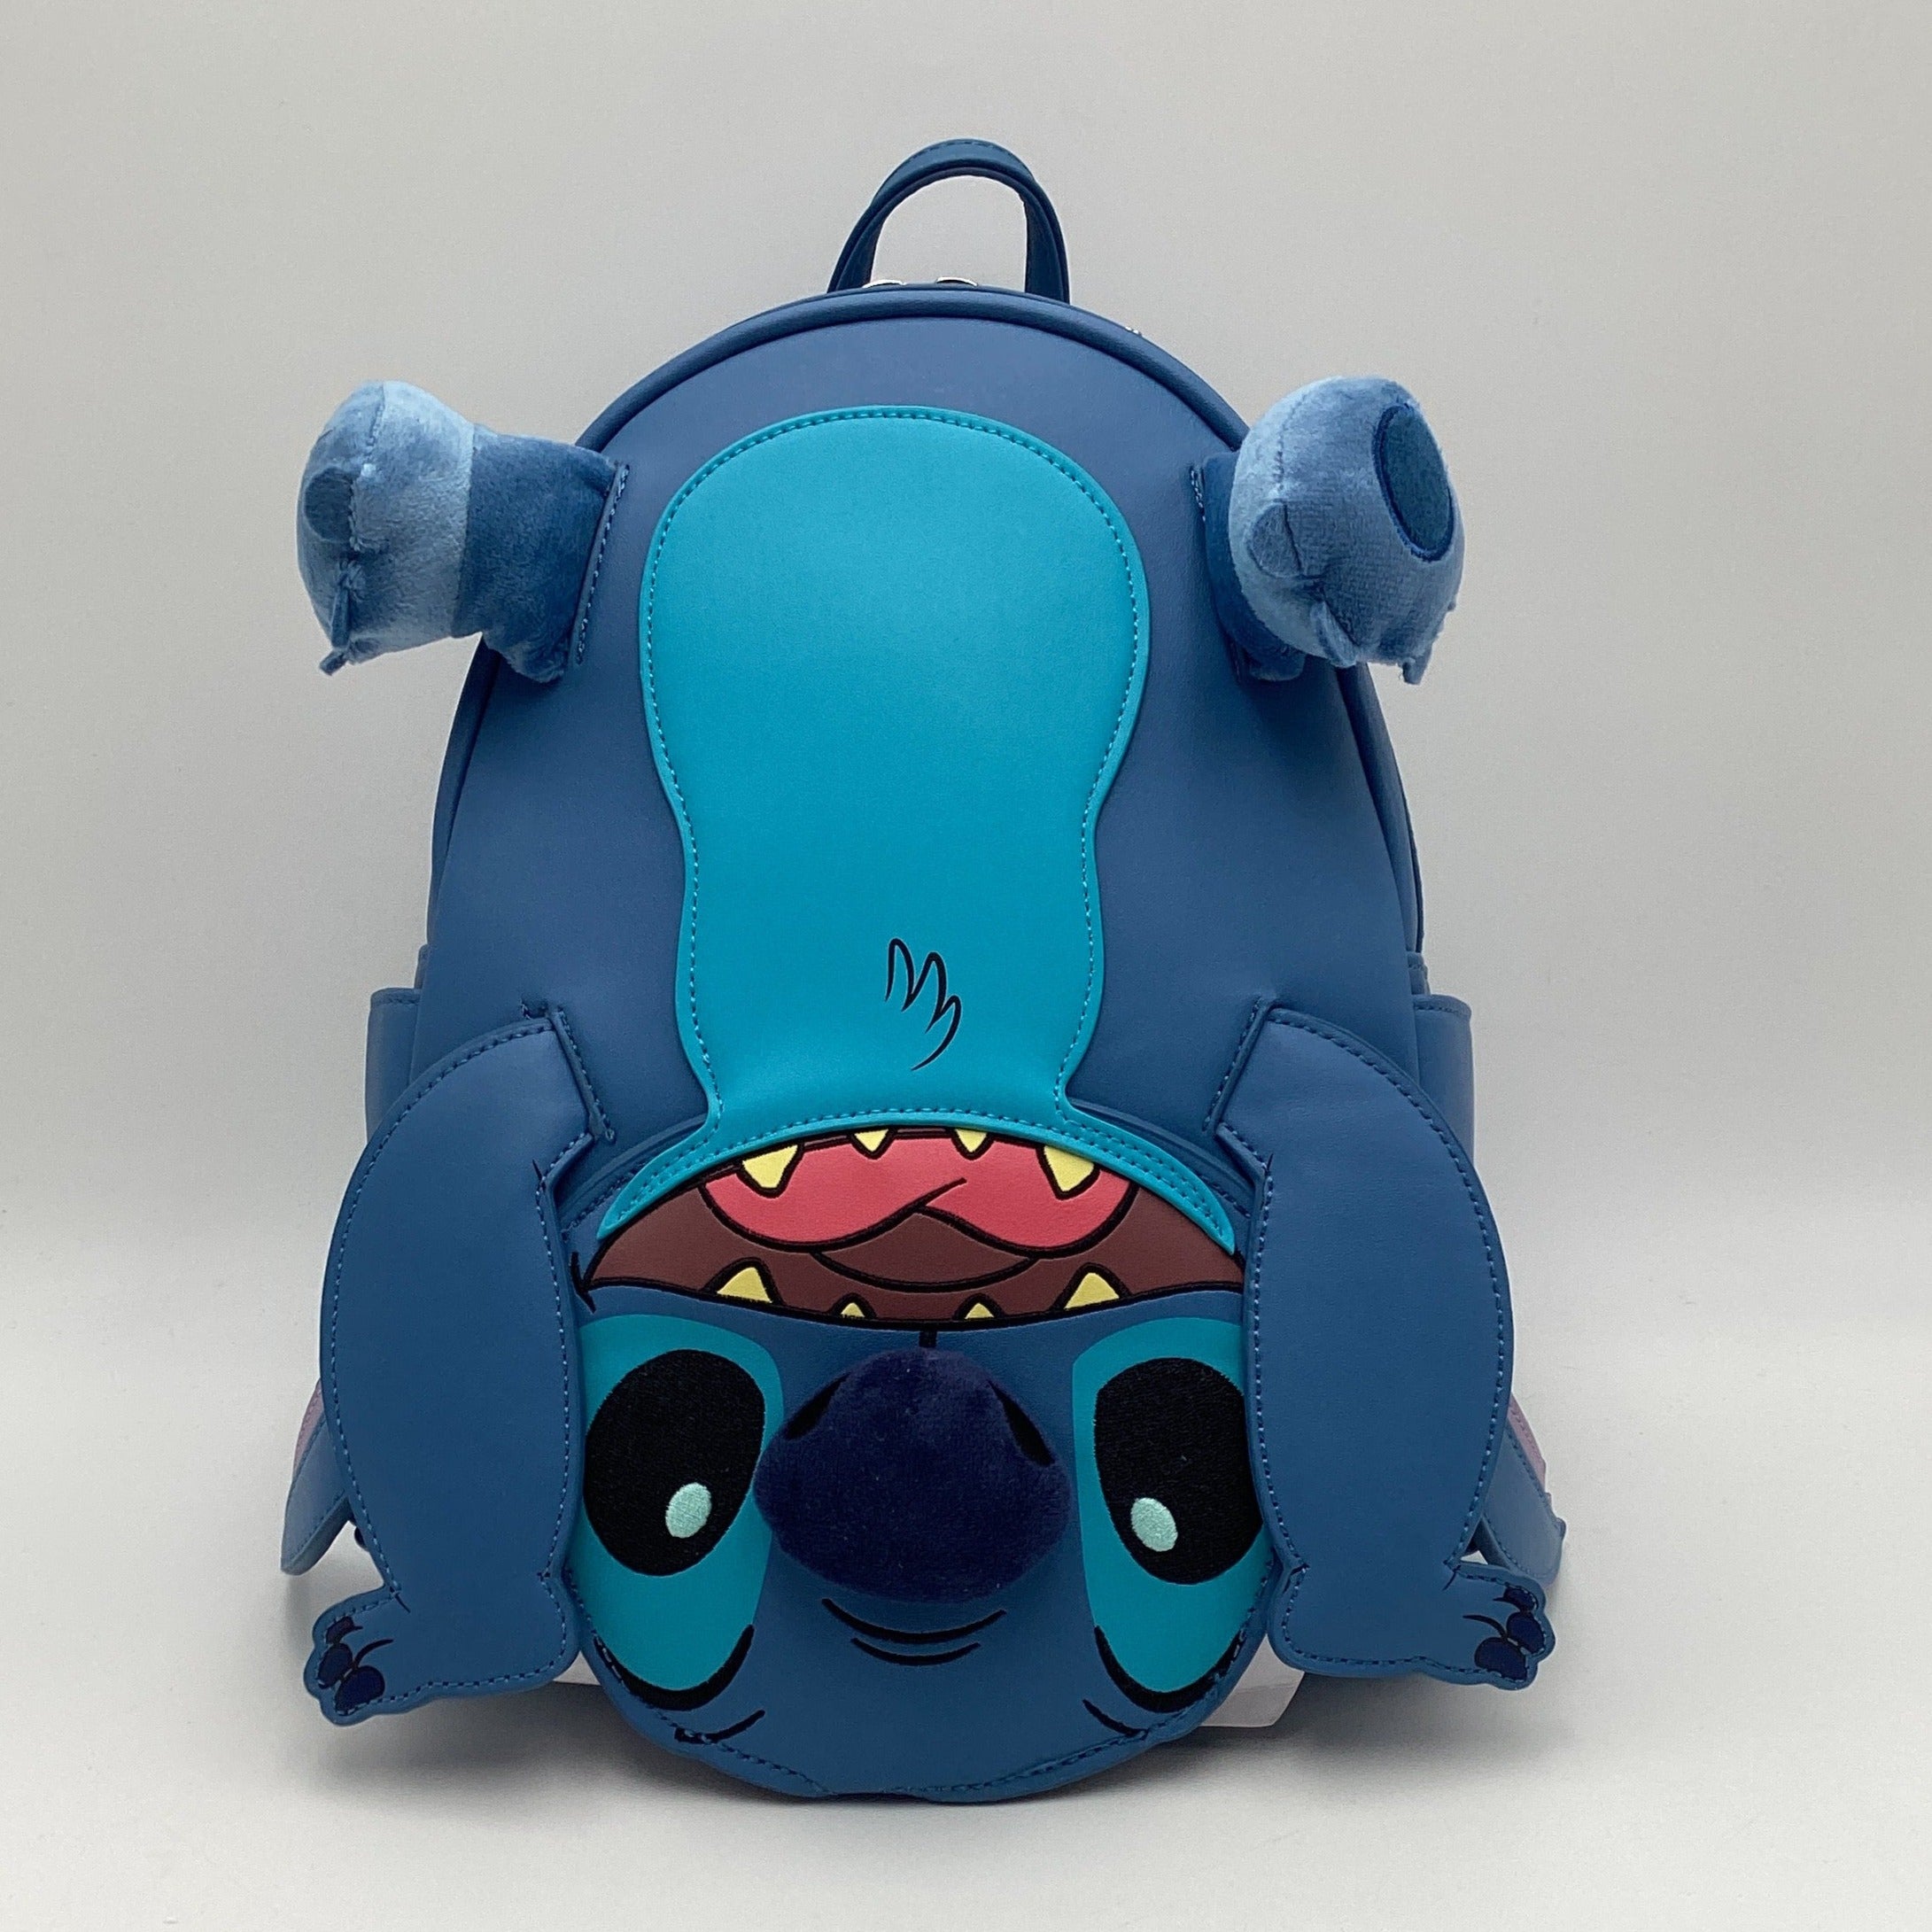 Stitch upside down Loungefly backpack mini stuffed